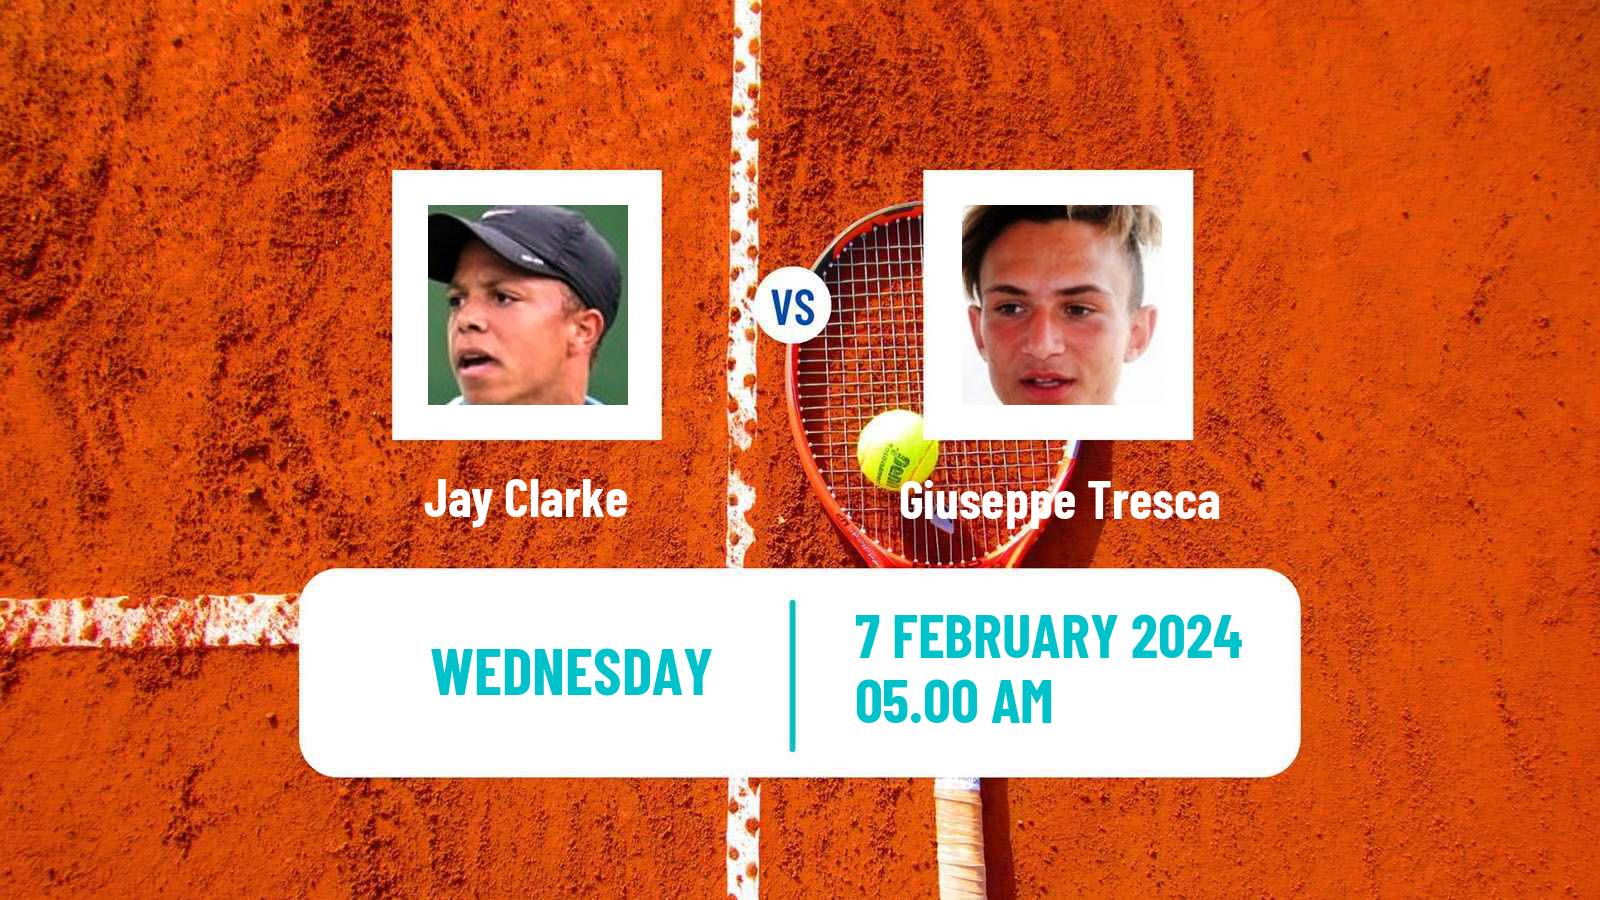 Tennis ITF M25 Hammamet 2 Men Jay Clarke - Giuseppe Tresca